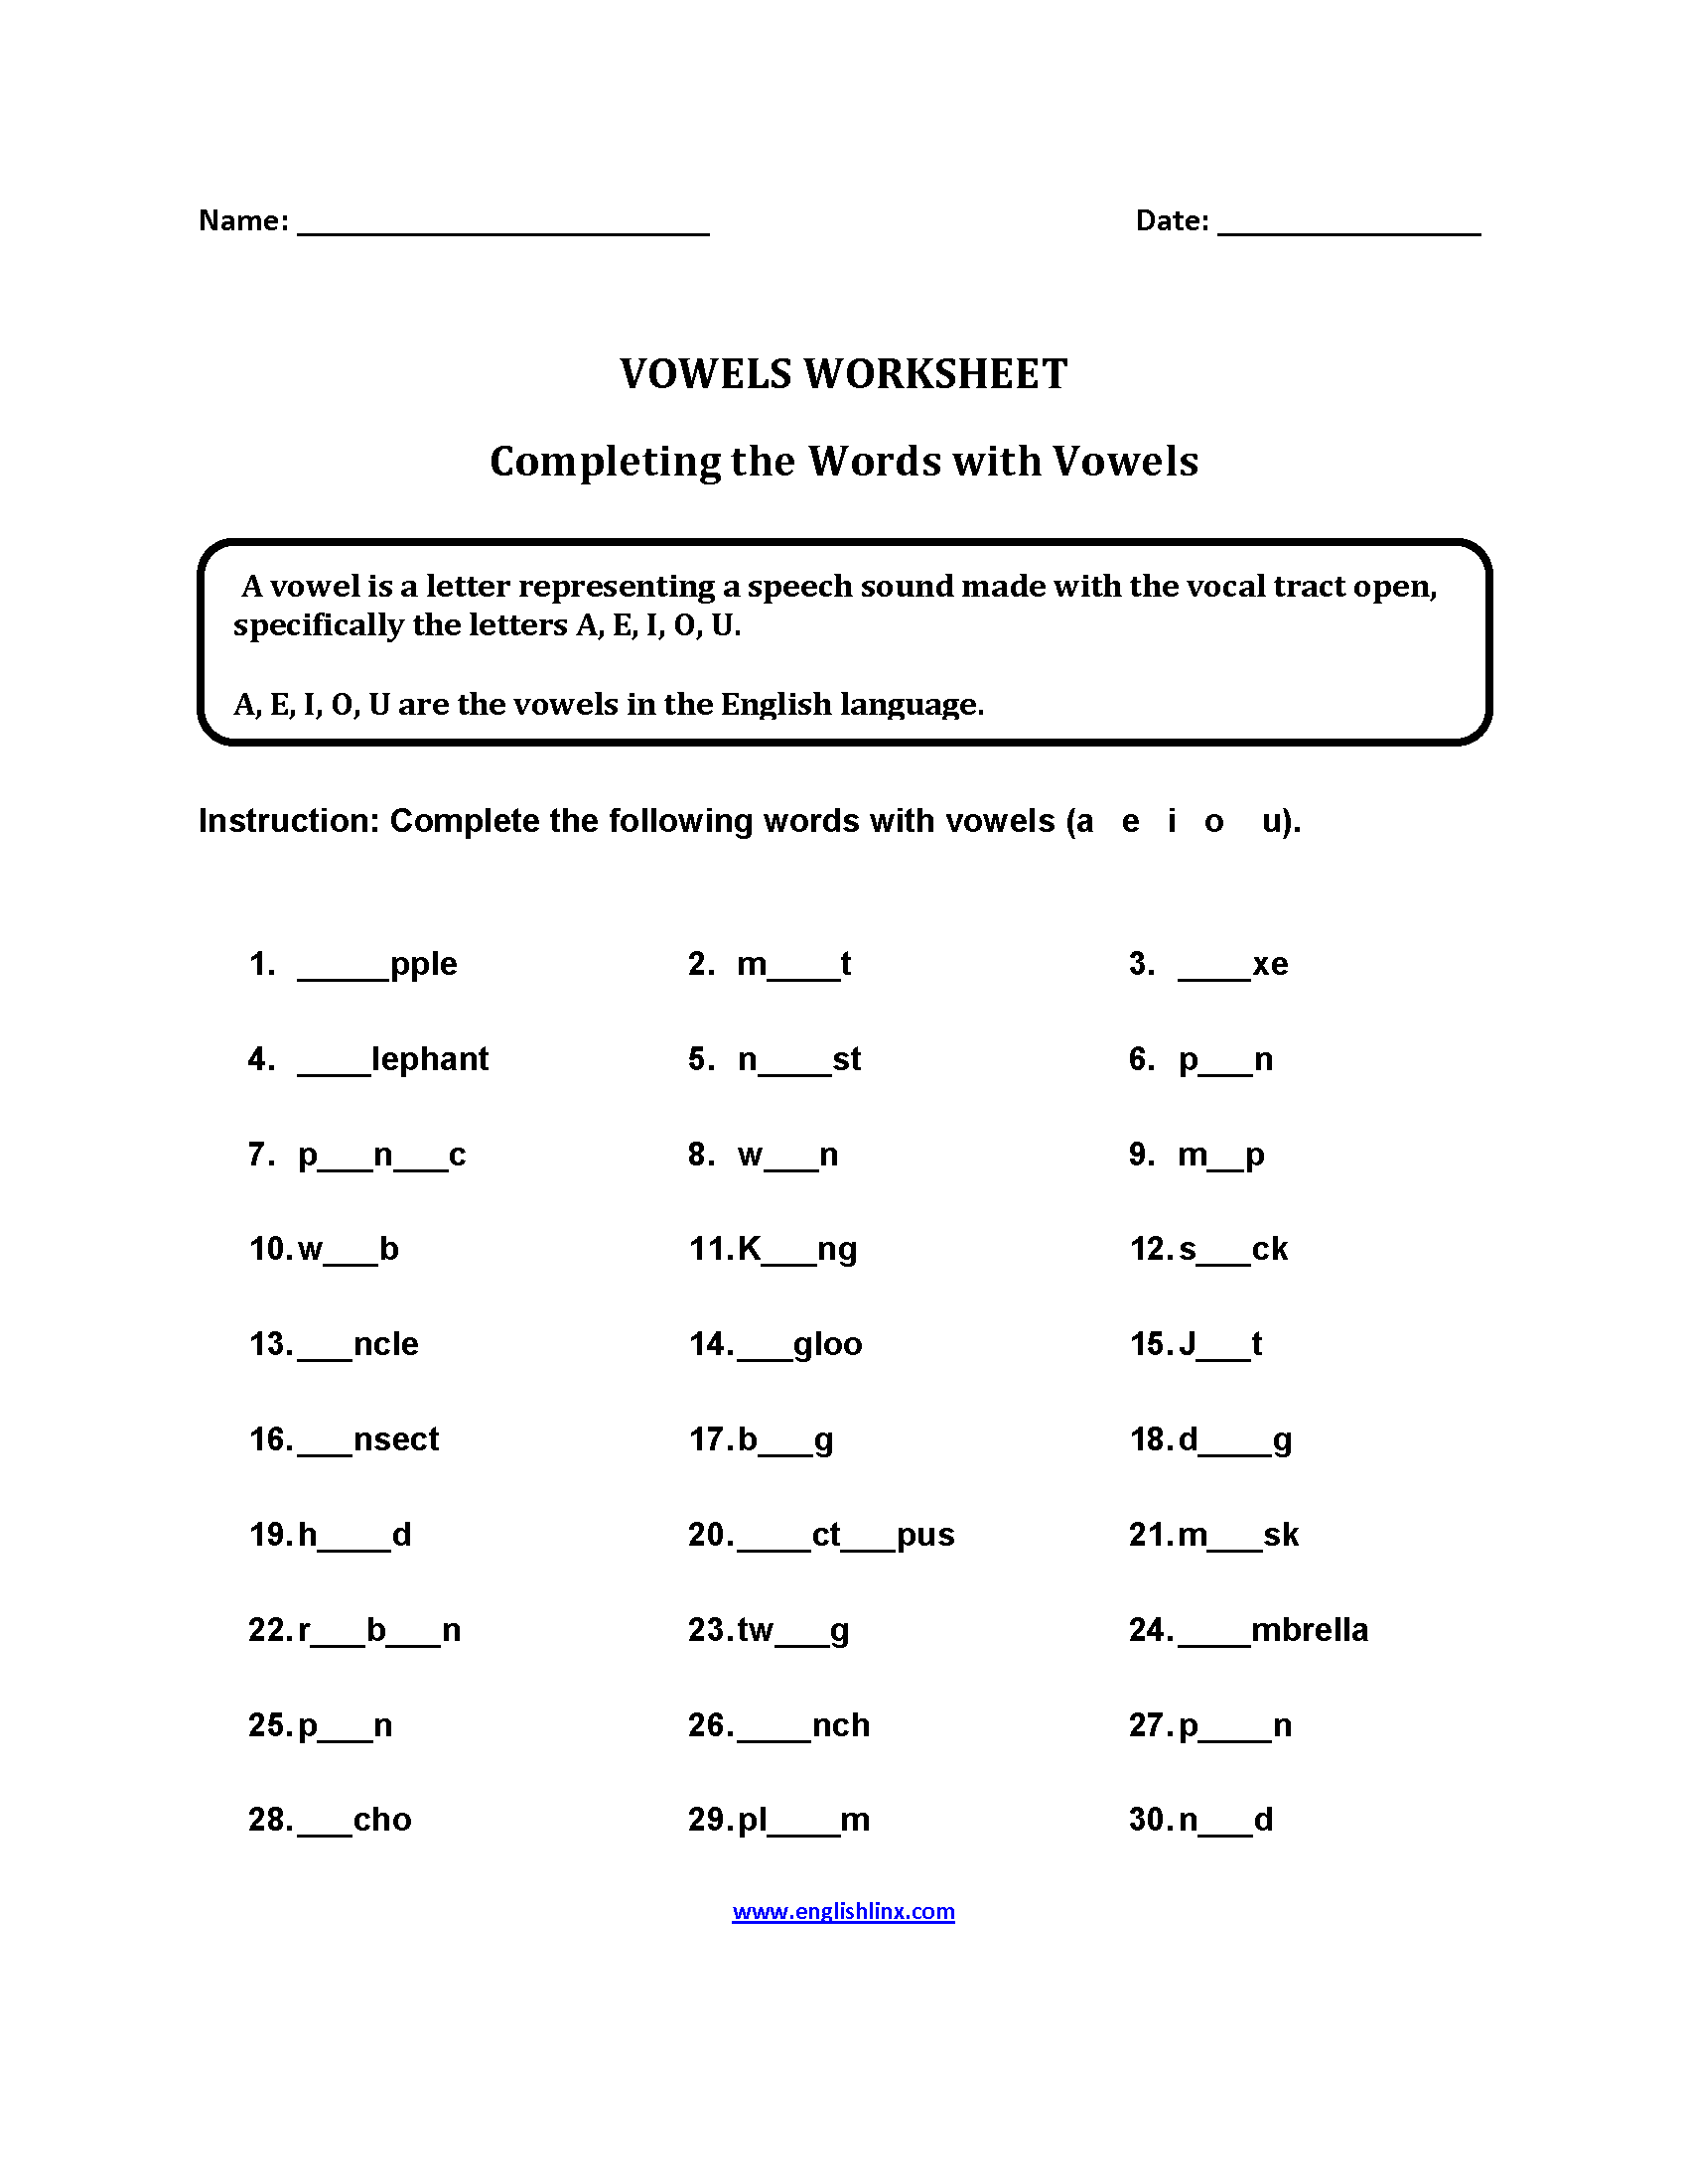 English Vowels Worksheet